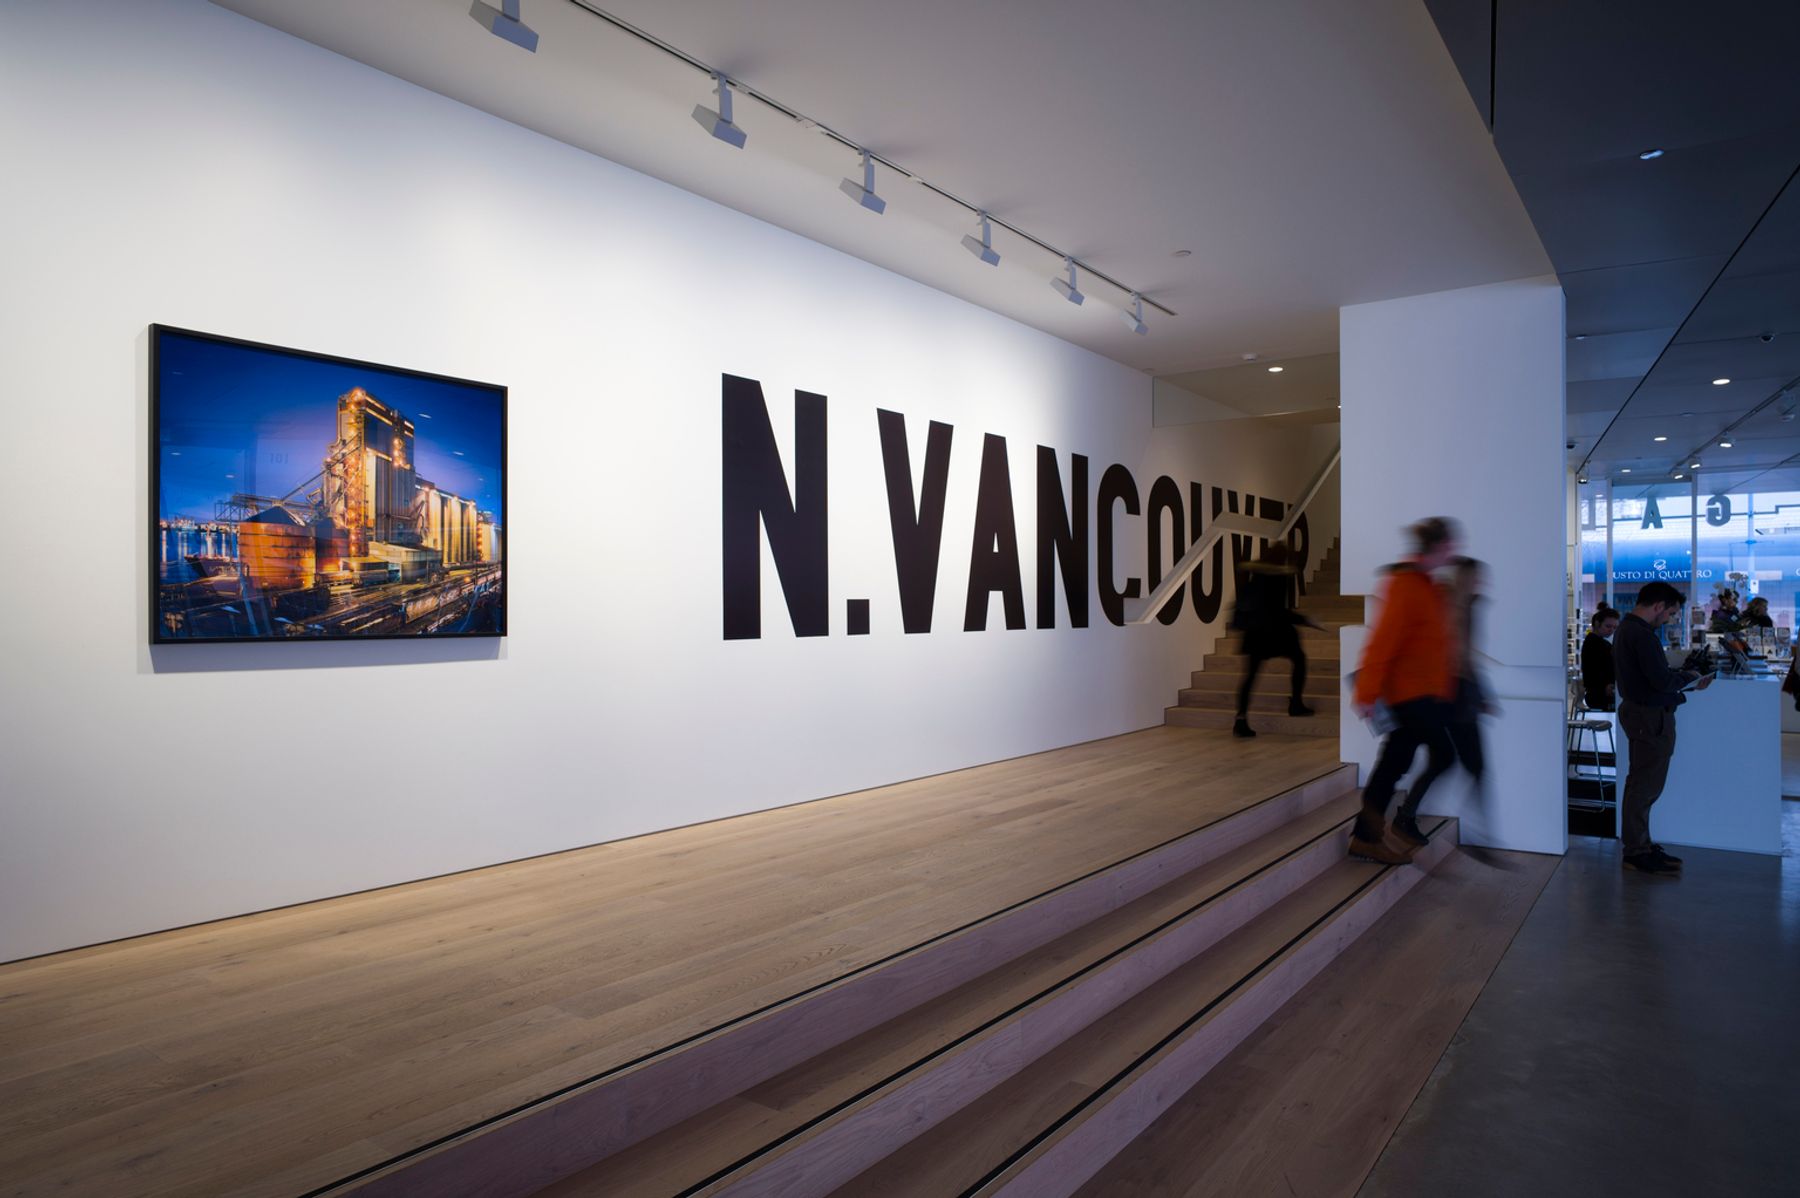 The Polygon Gallery, Vancouver. Arquitectura: Patkau Architects, Vancouver. Fotografía: Moritz Hillebrand, Zúrich.